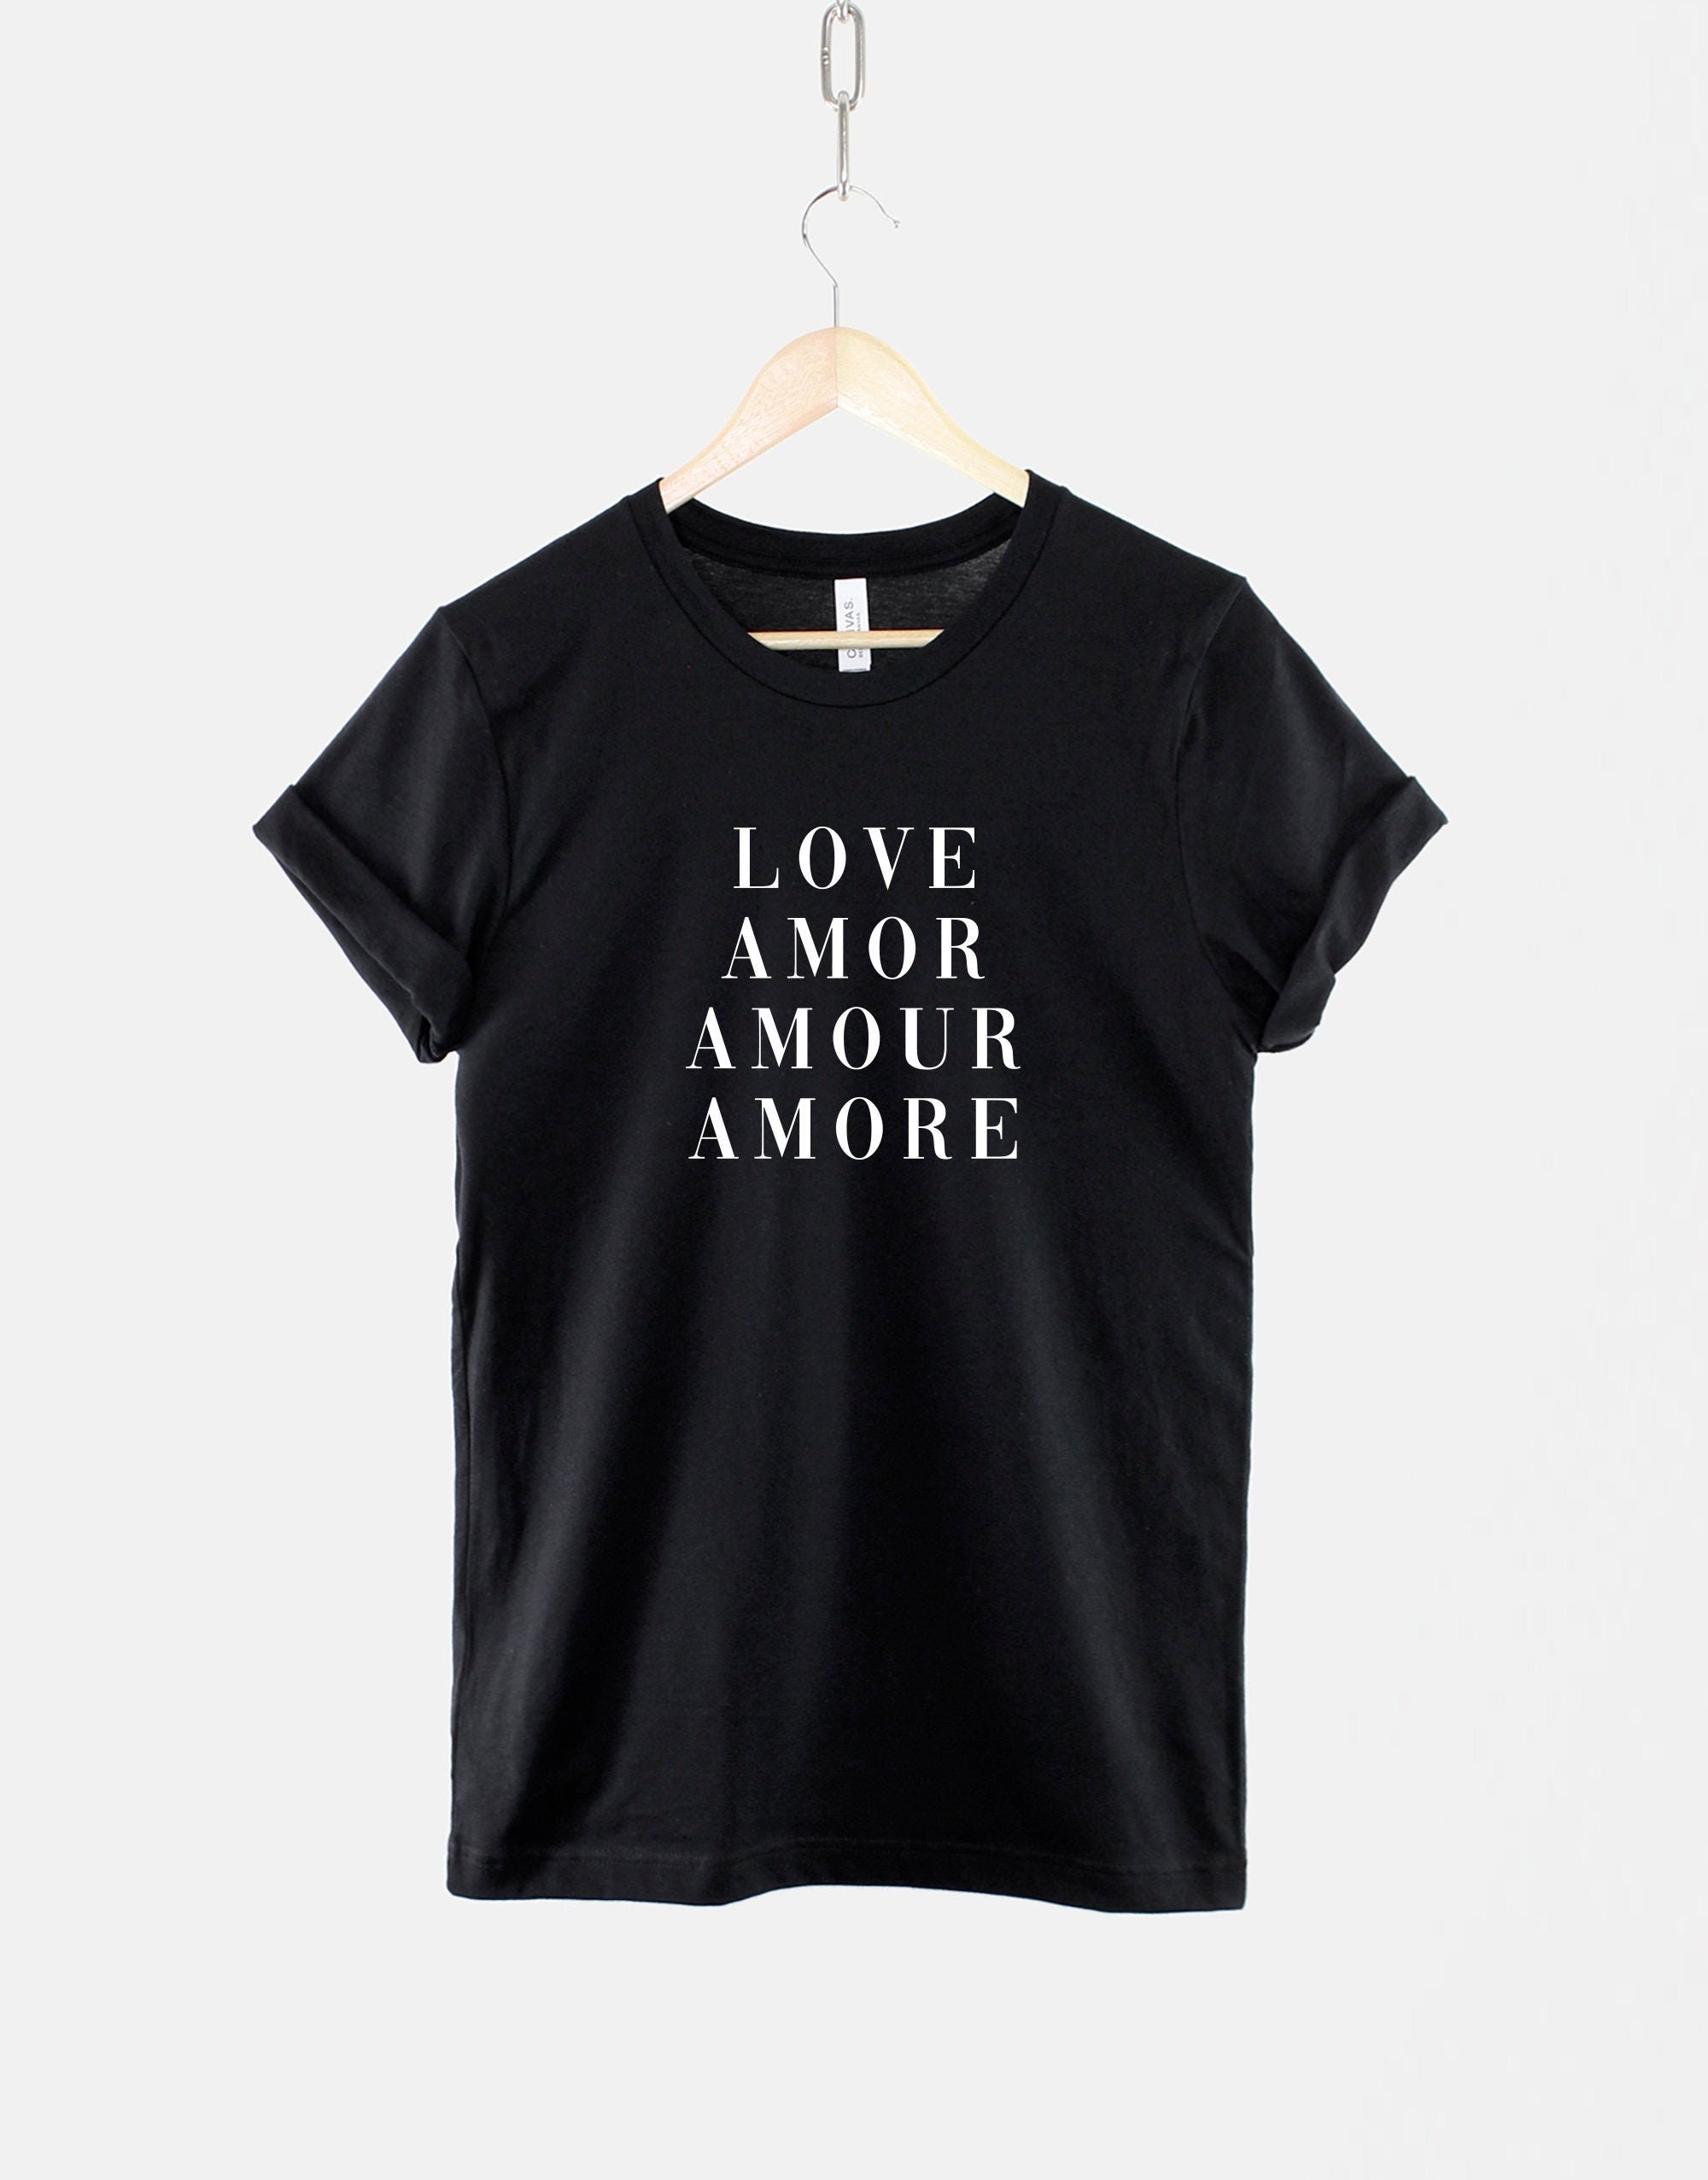 Amore love. Футболка Amor. Футболка Amor Amor. Футболка Аморе Аморе Аморе. Amore Amore Amore Amore на футболку.